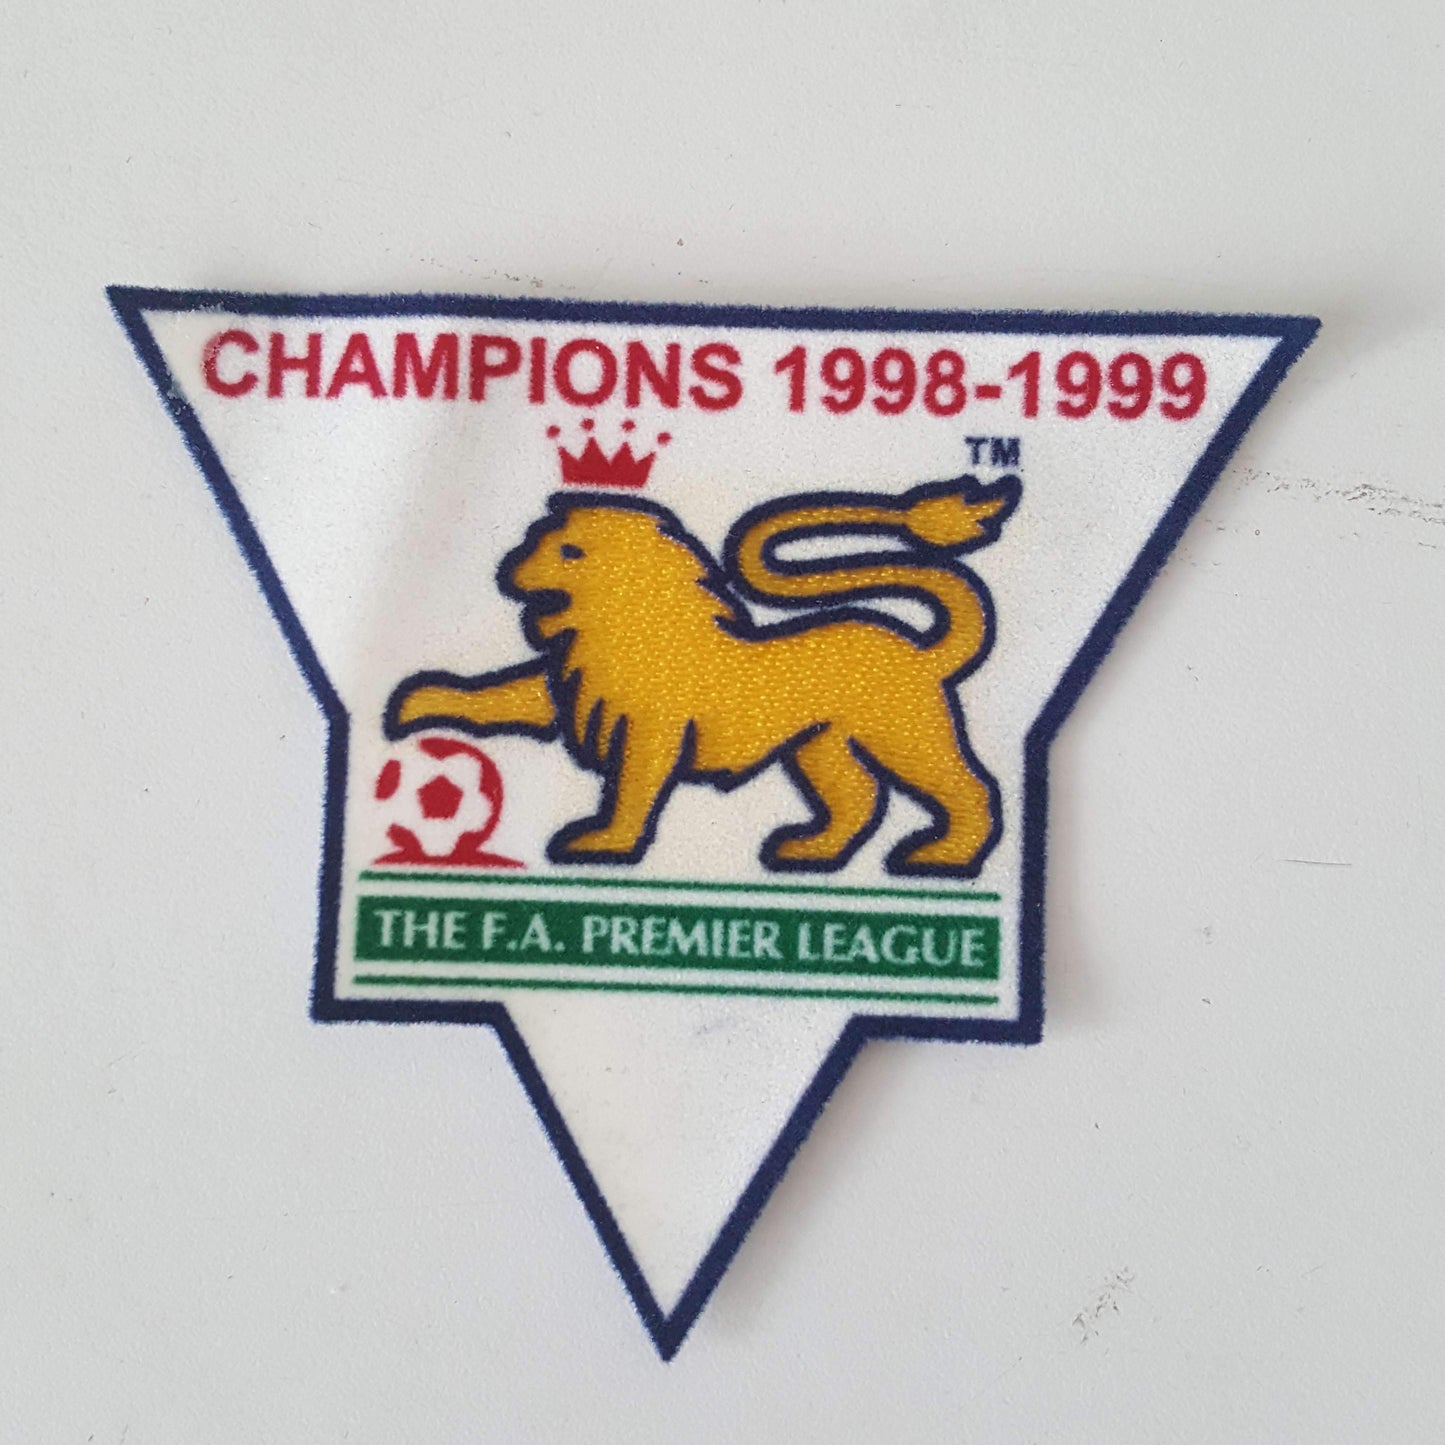 1998/99 F.A Premier League Champions Patch - ClassicFootballJersey